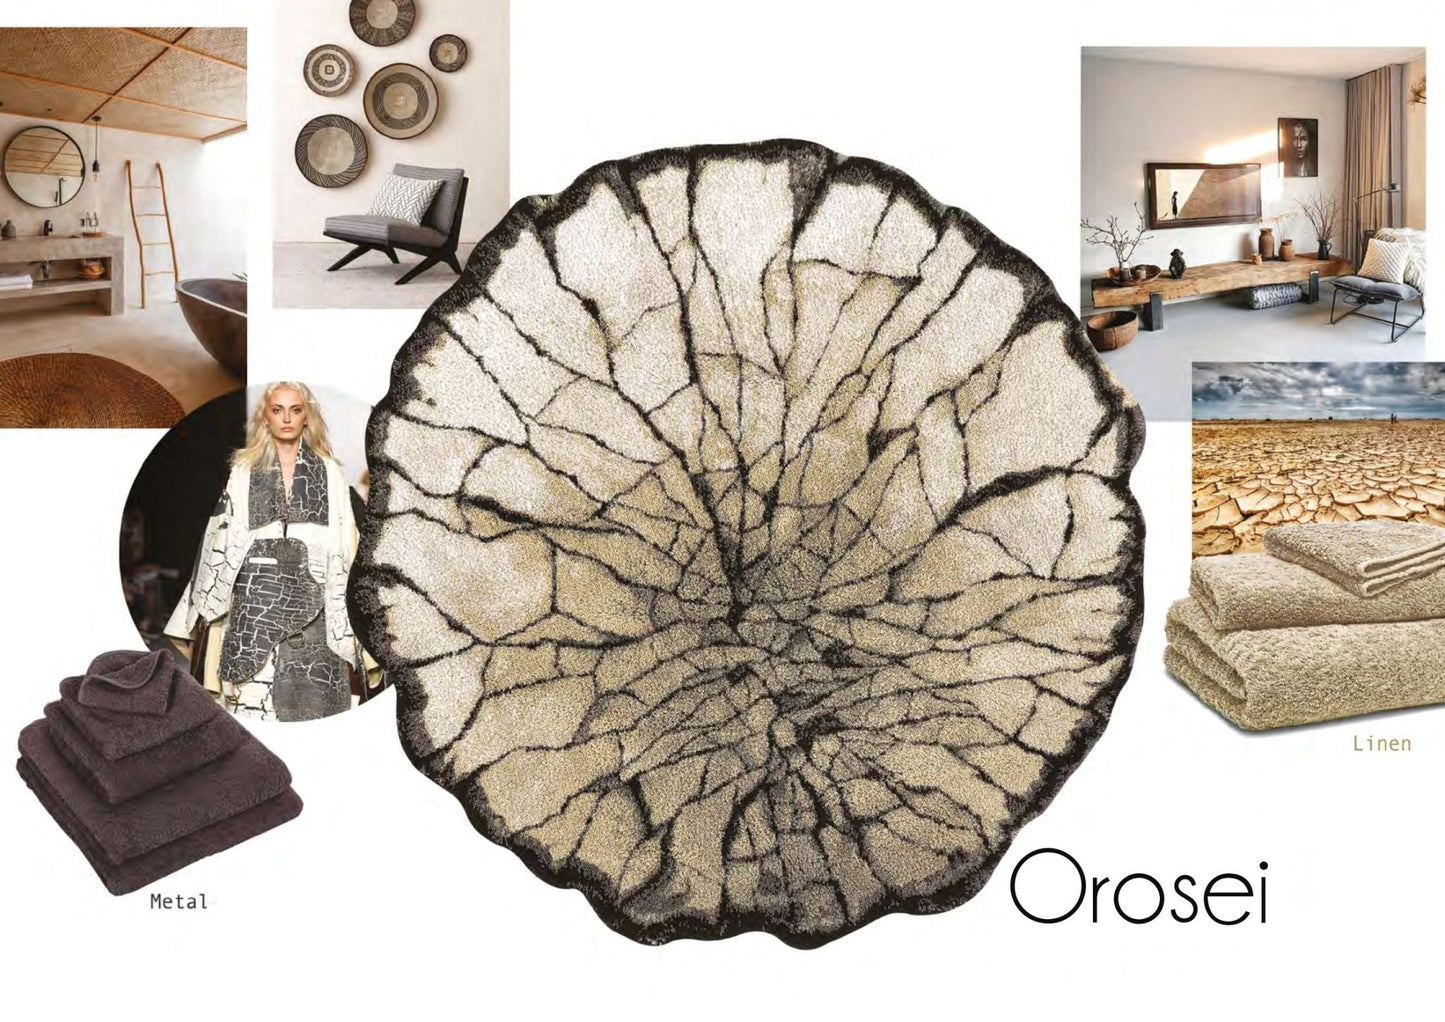 OROSEI Luxury Egyptian Cotton Bathroom Mat by Abyss Habidecor - |VESIMI Design| Luxury and Rustic bathrooms online